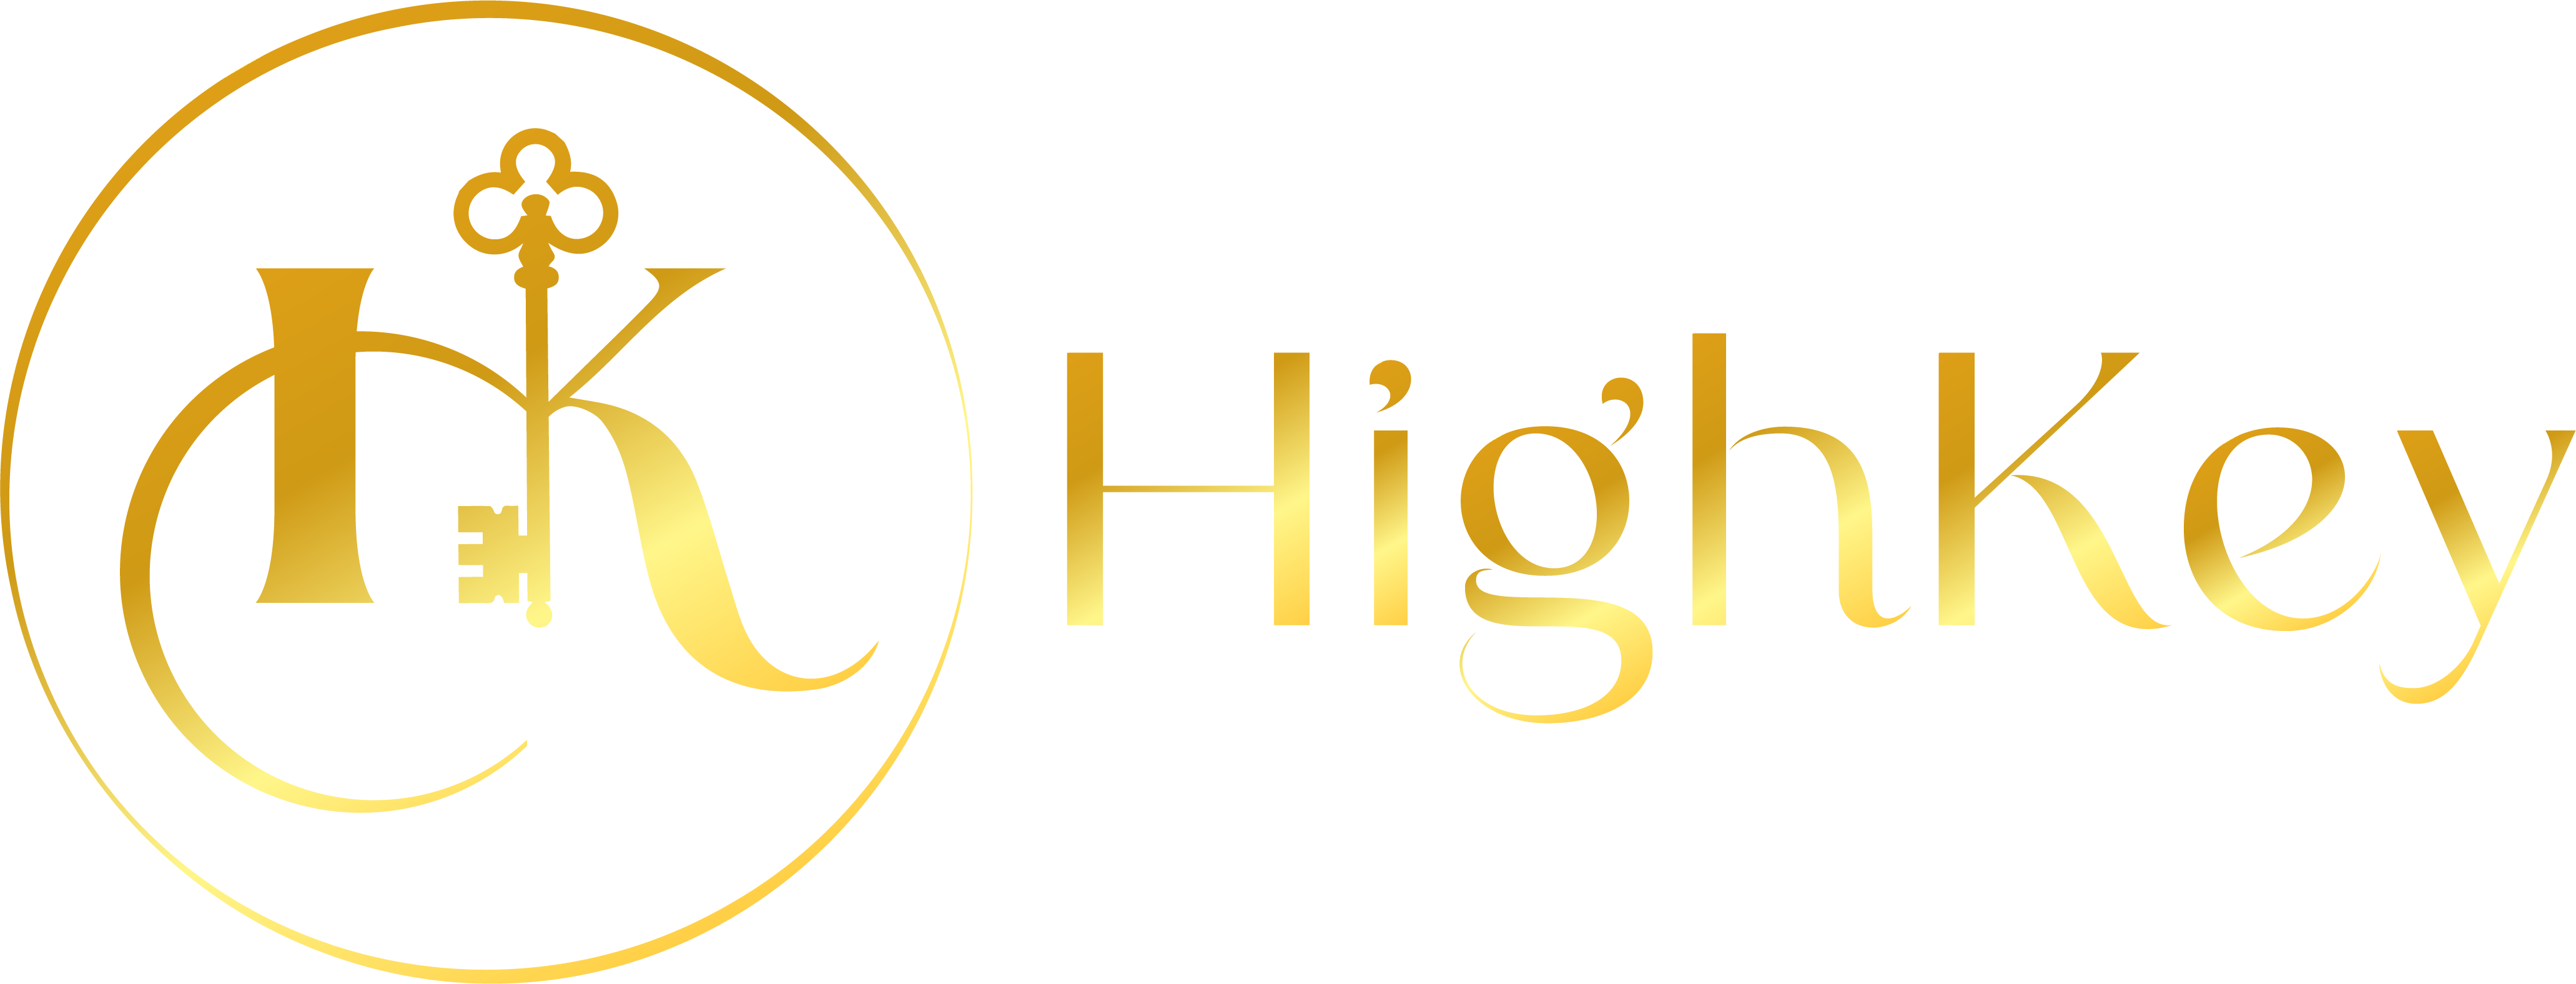 High Key Logo